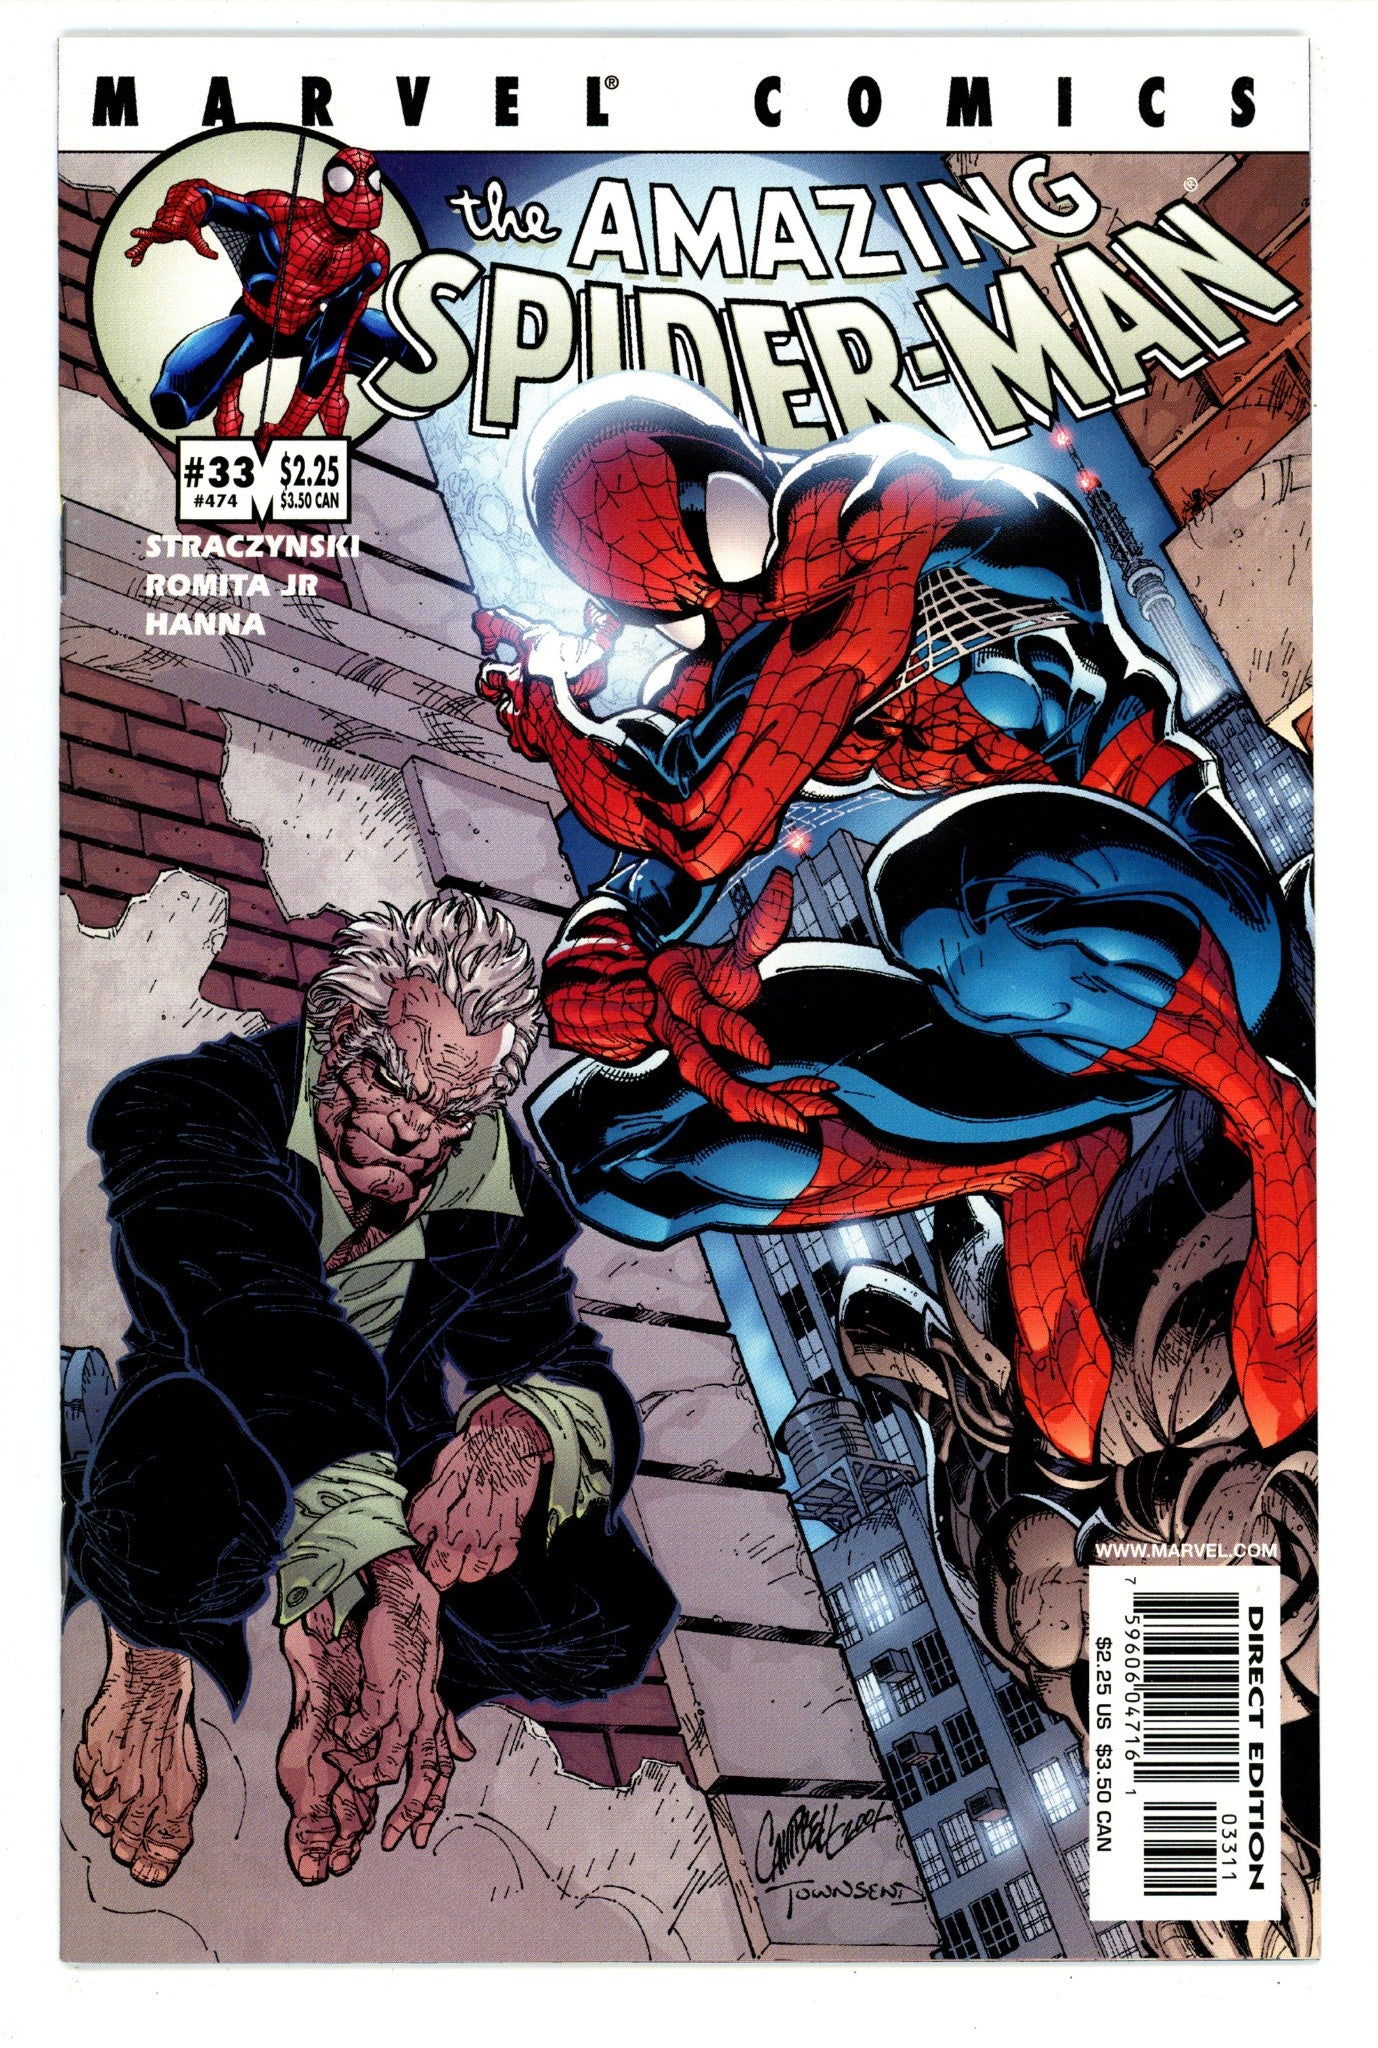 The Amazing Spider-Man Vol 2 33 (474) VF/NM (9.0) (2001) 